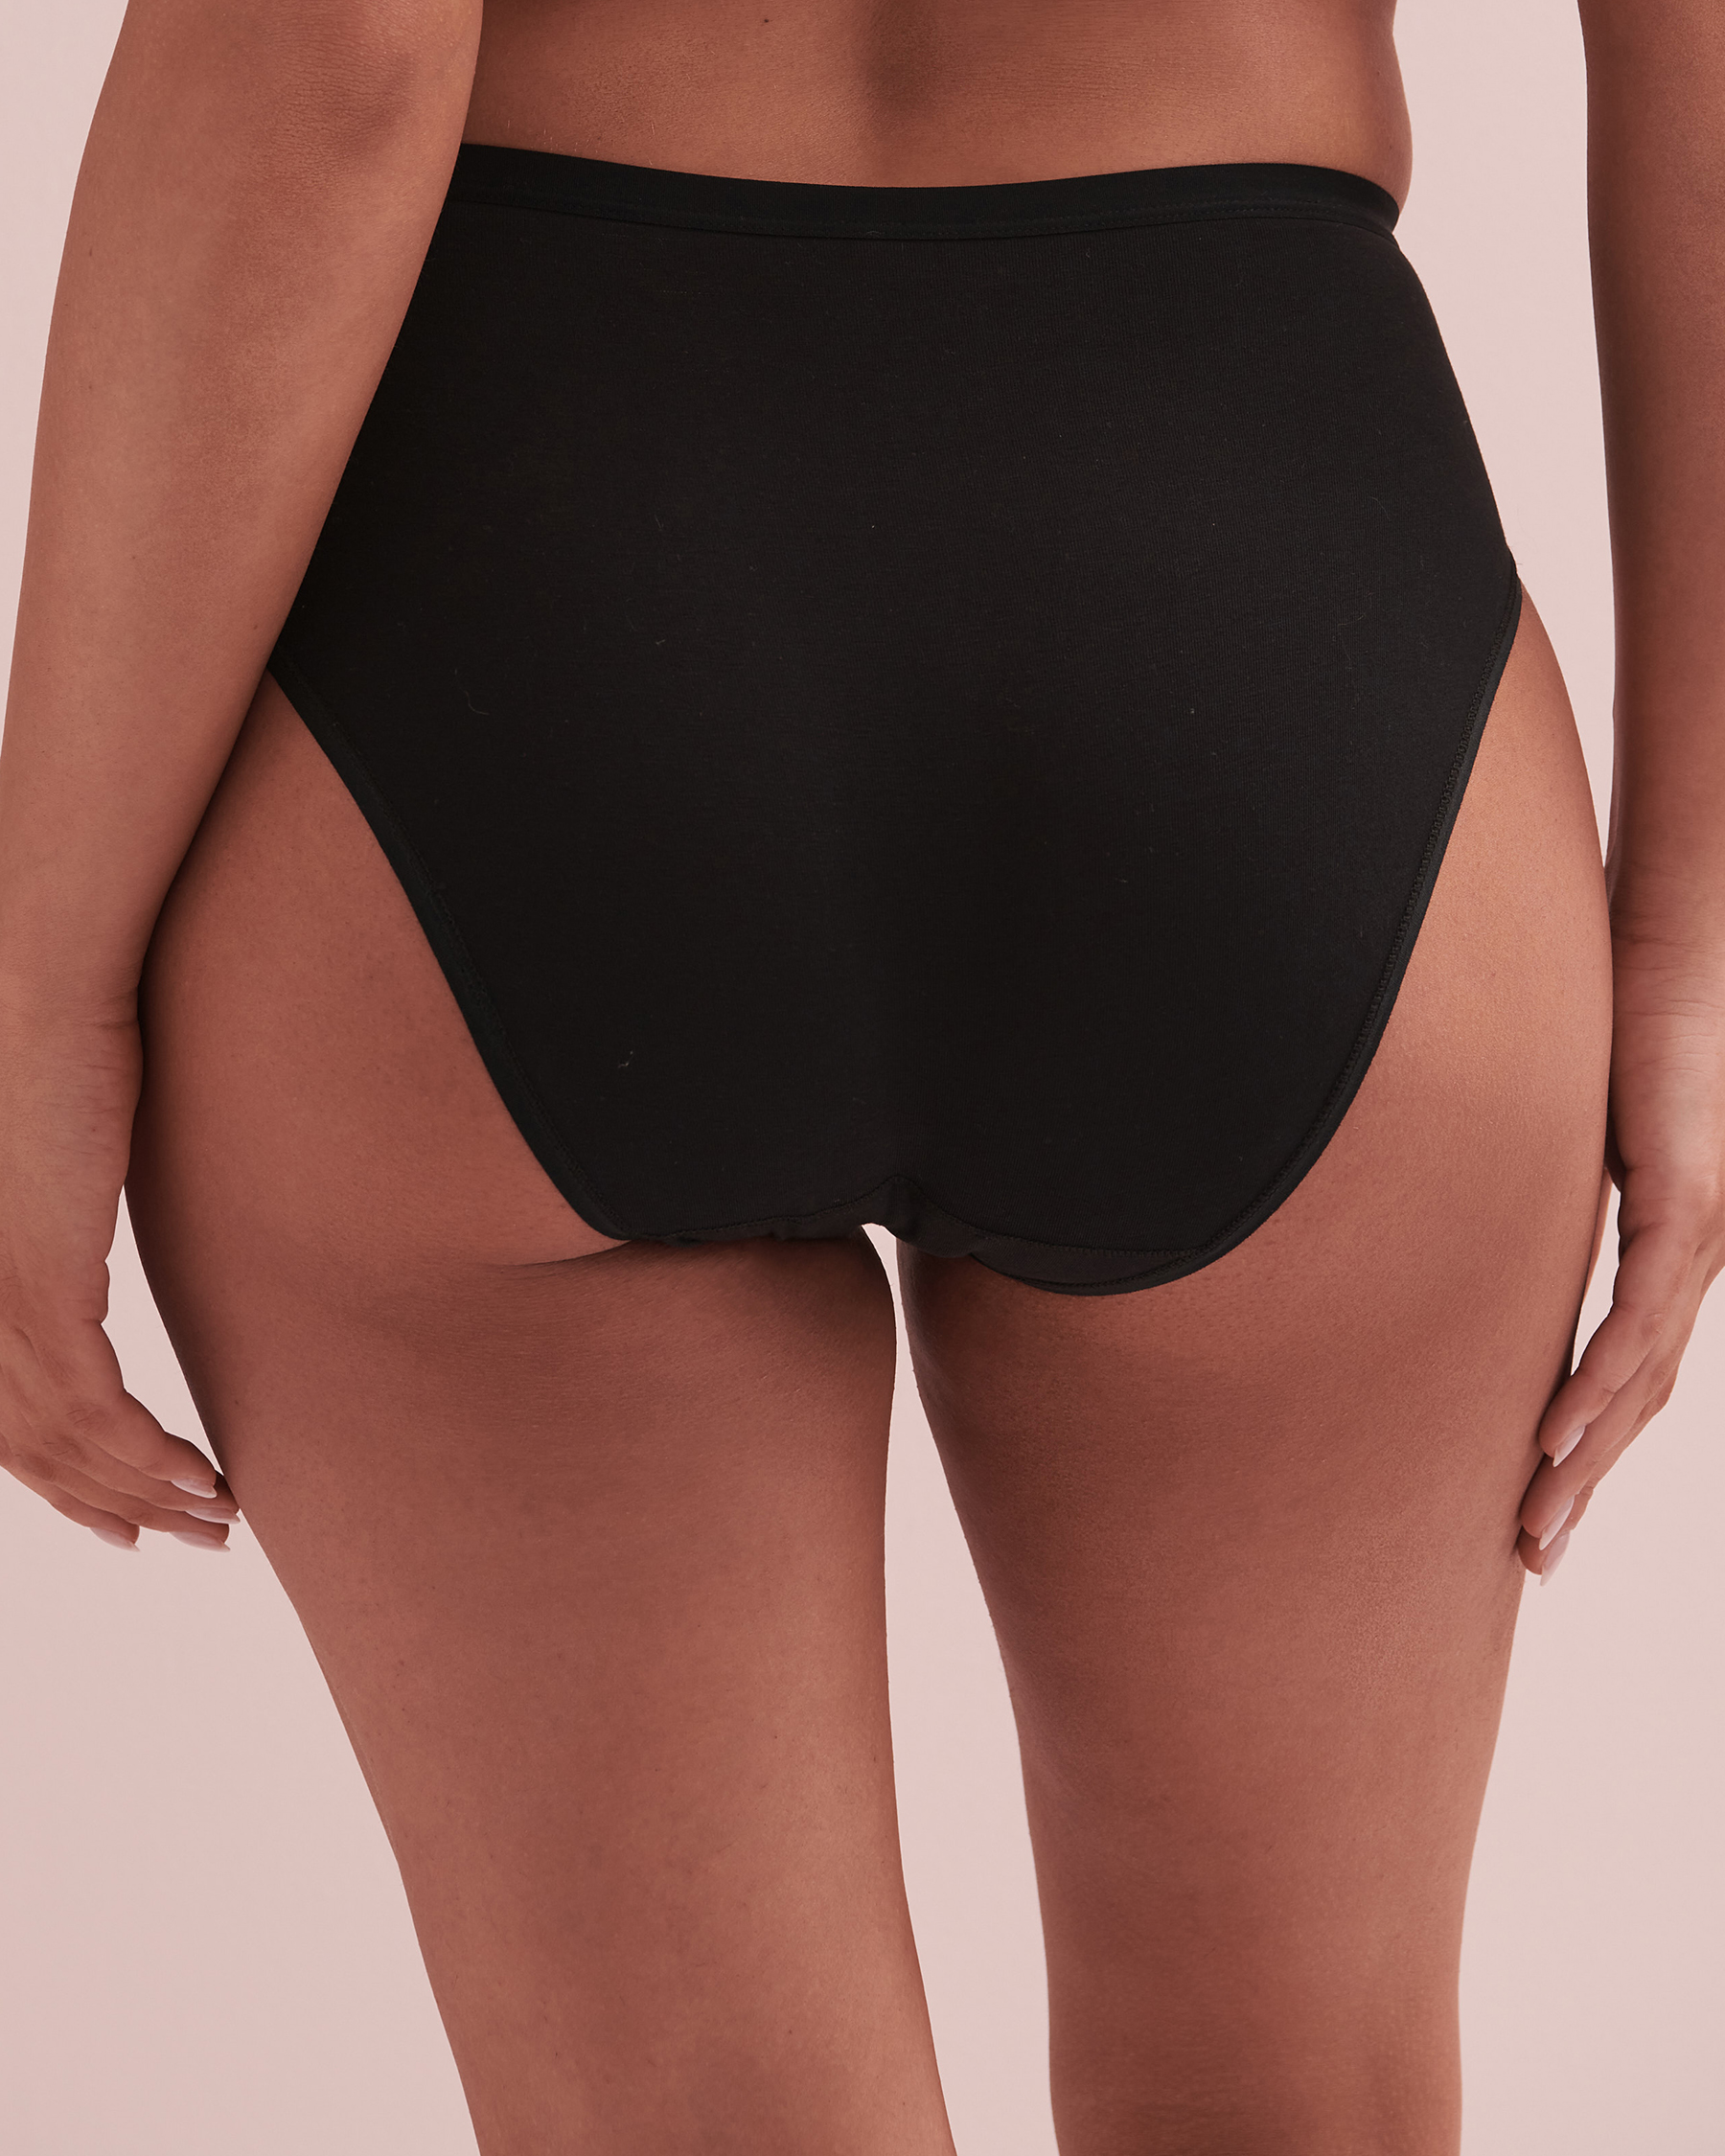 High Waist Bikini Cotton Period Panty by Newex Black 20300190 - View2